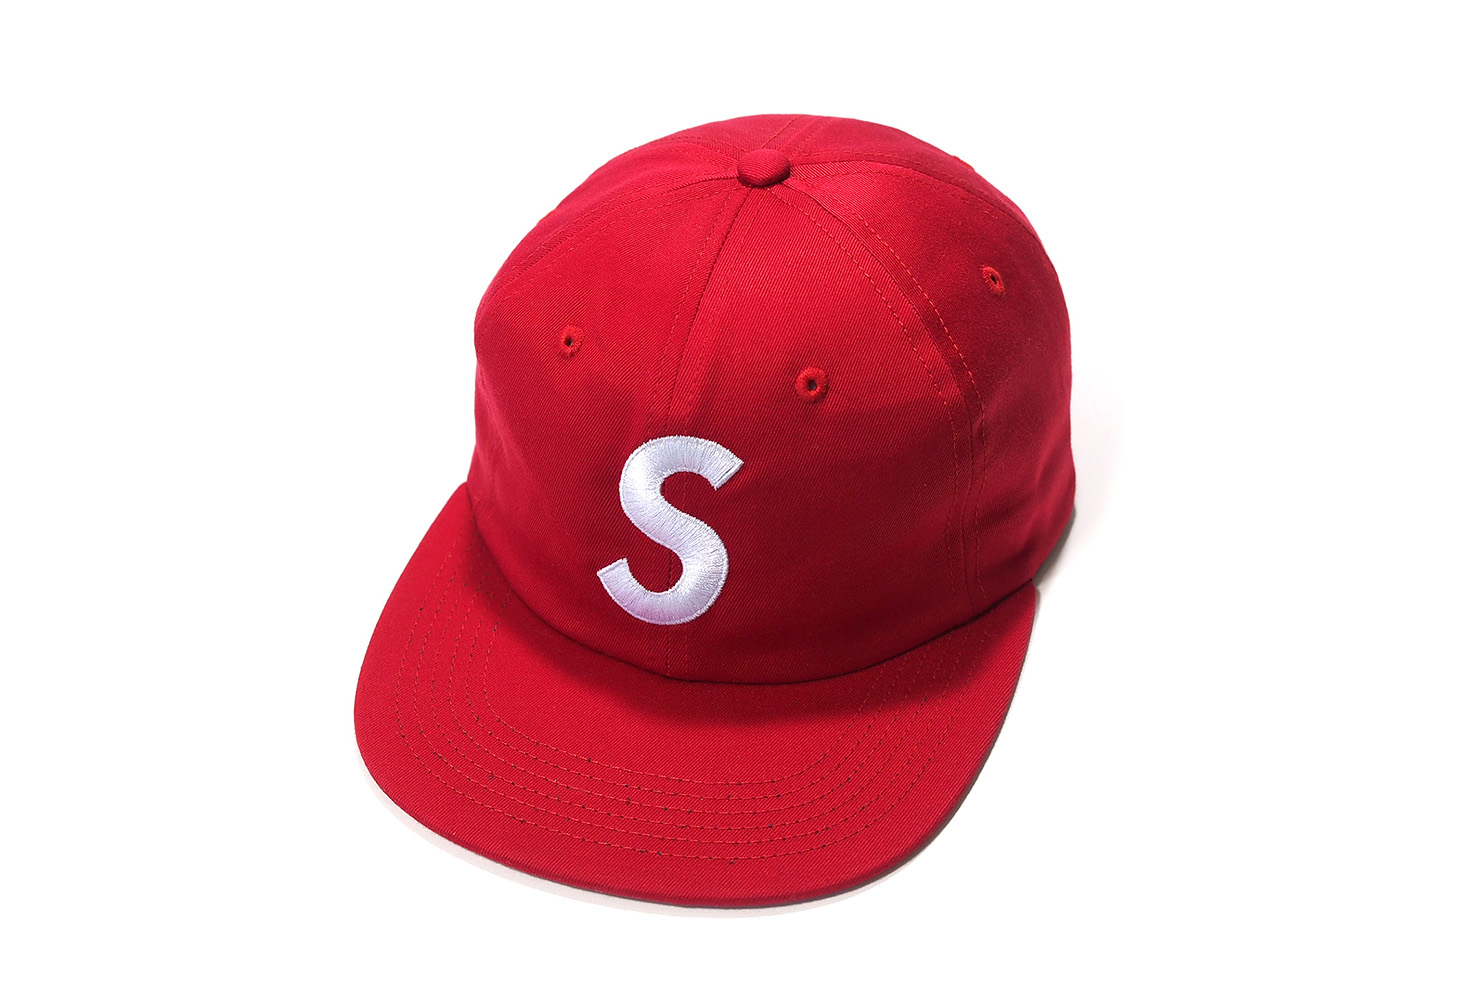 Supreme S Logo 6-Panel Cap ρуρуρуAprilroofs